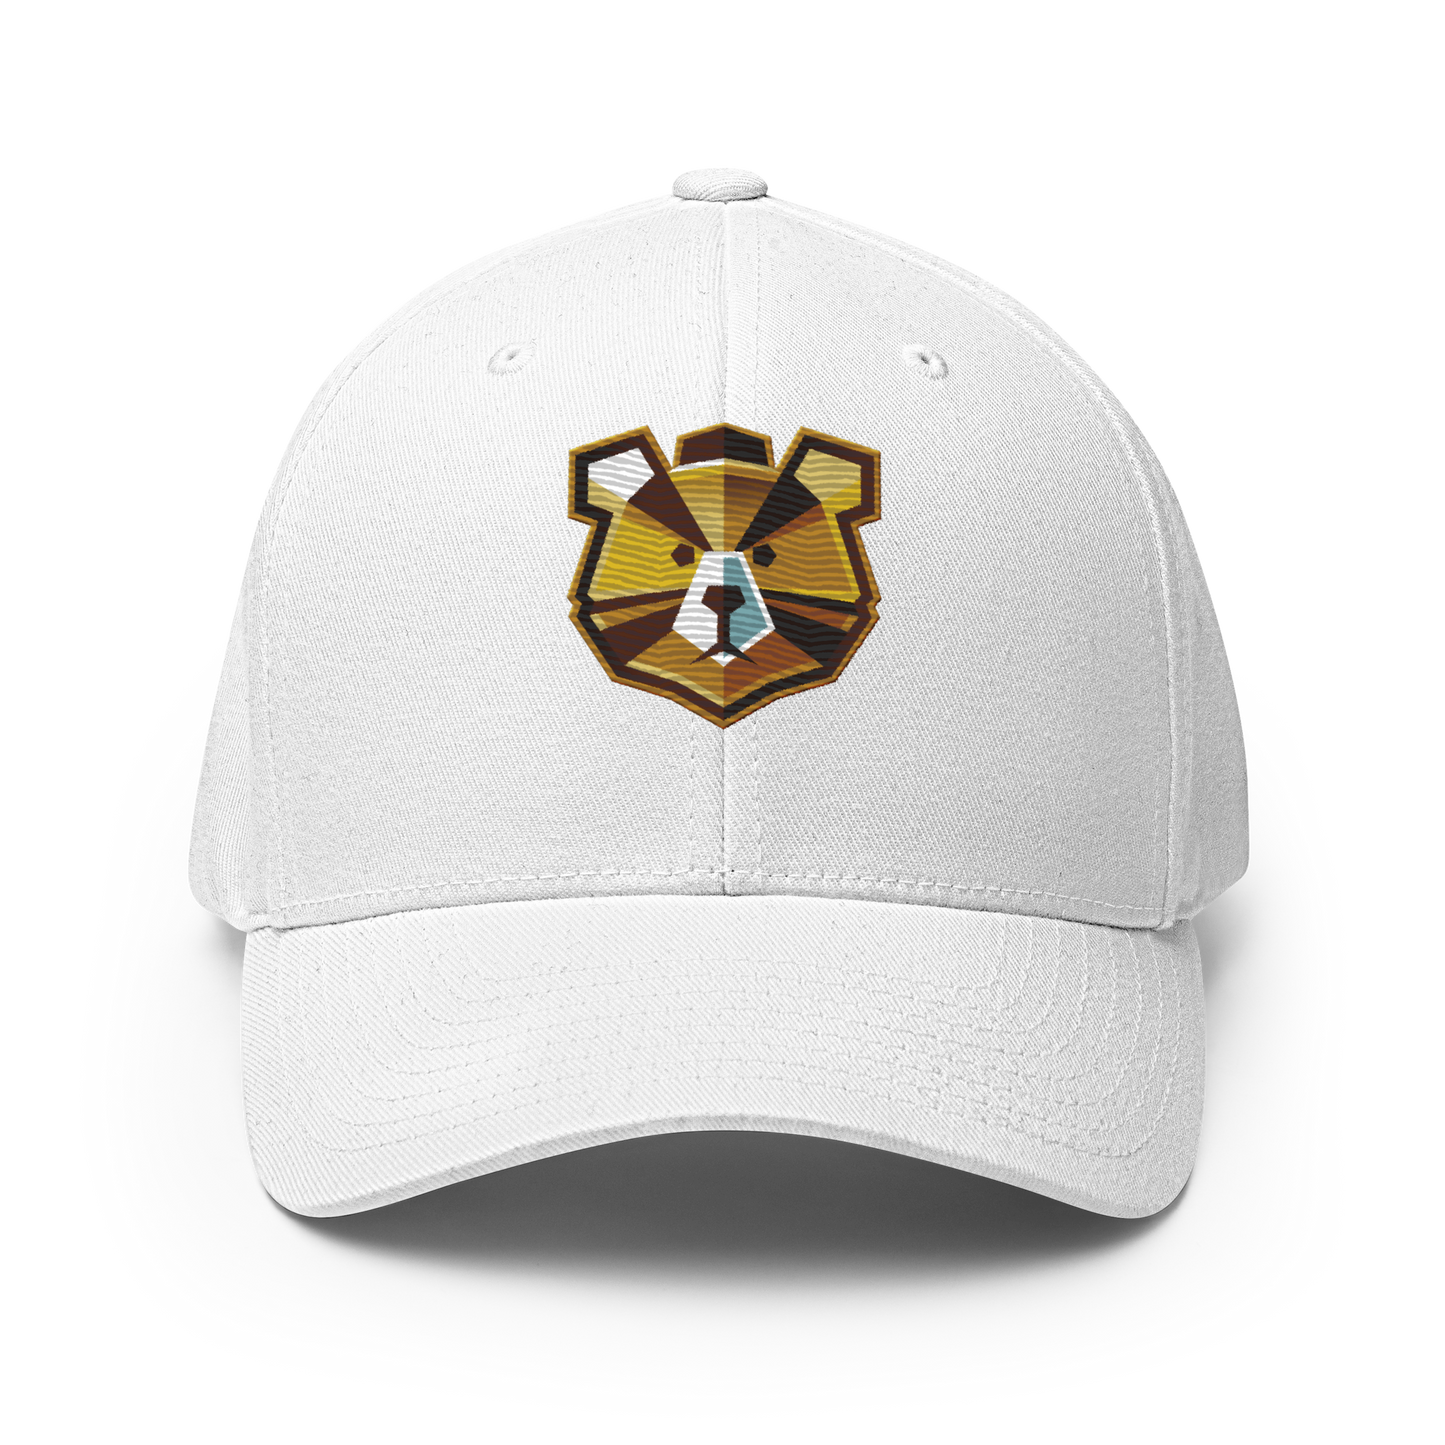 Official GrandPooBear Cap